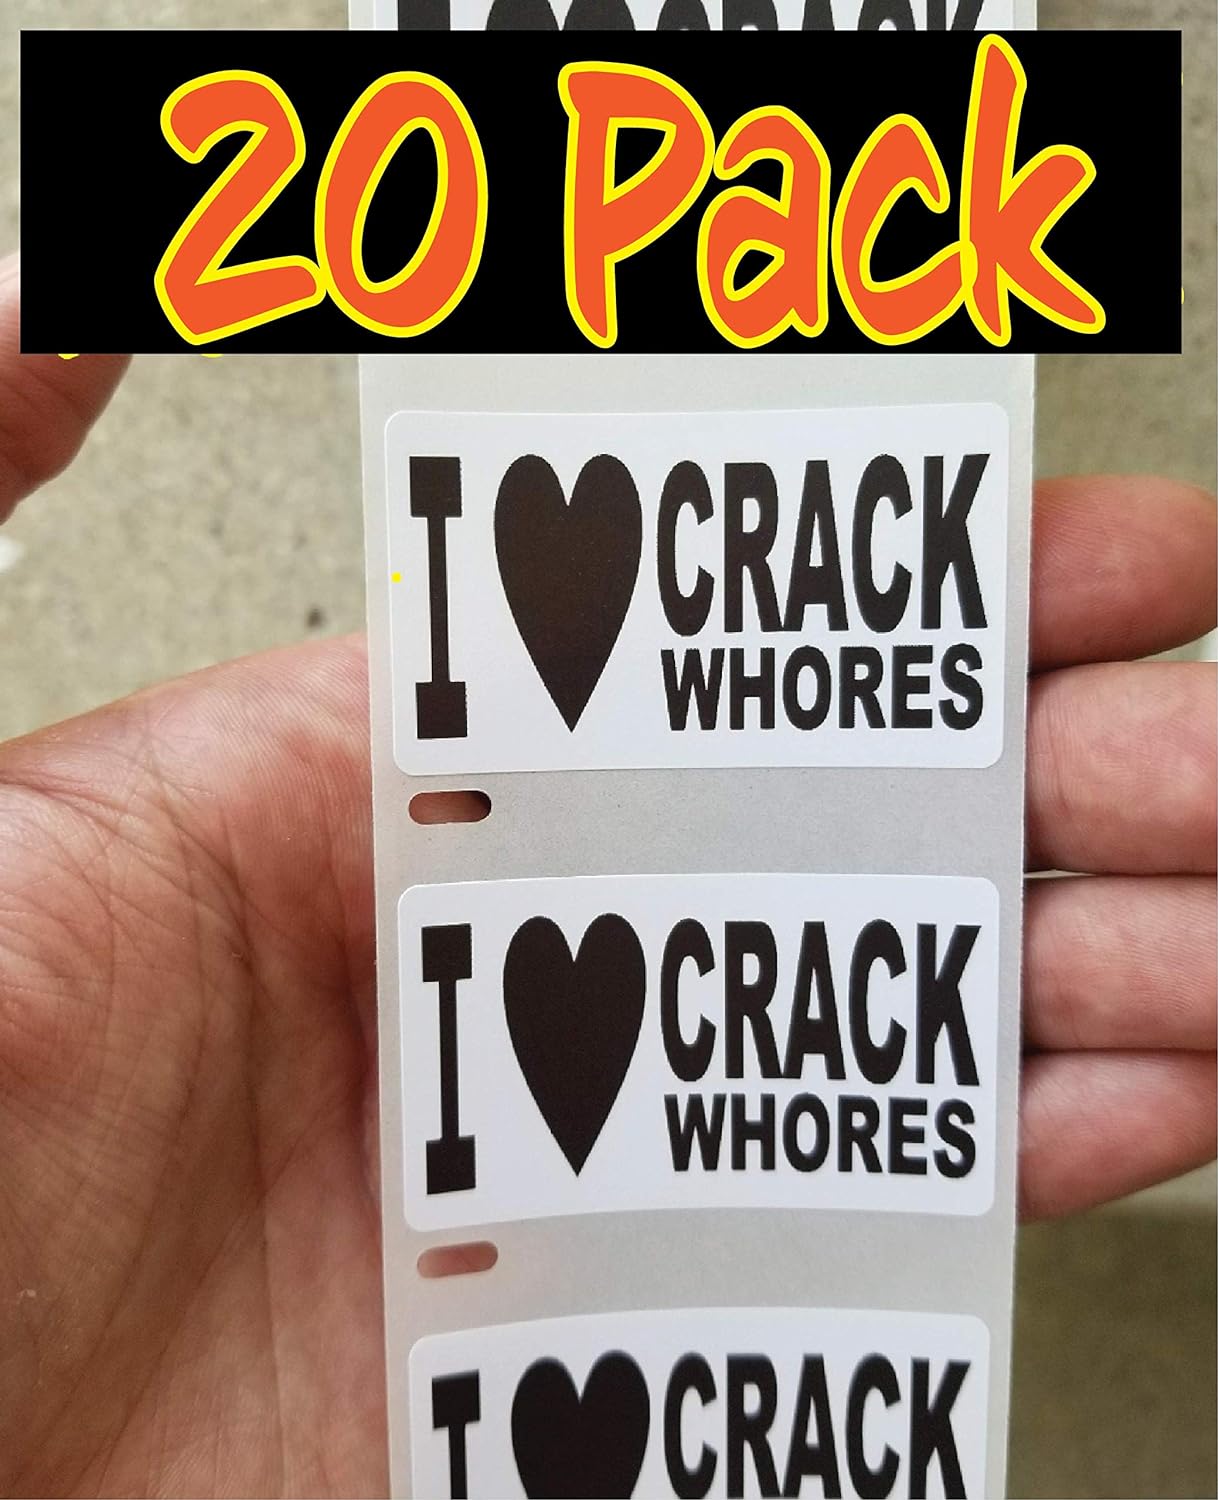 adam hakes recommends pics of crack whores pic